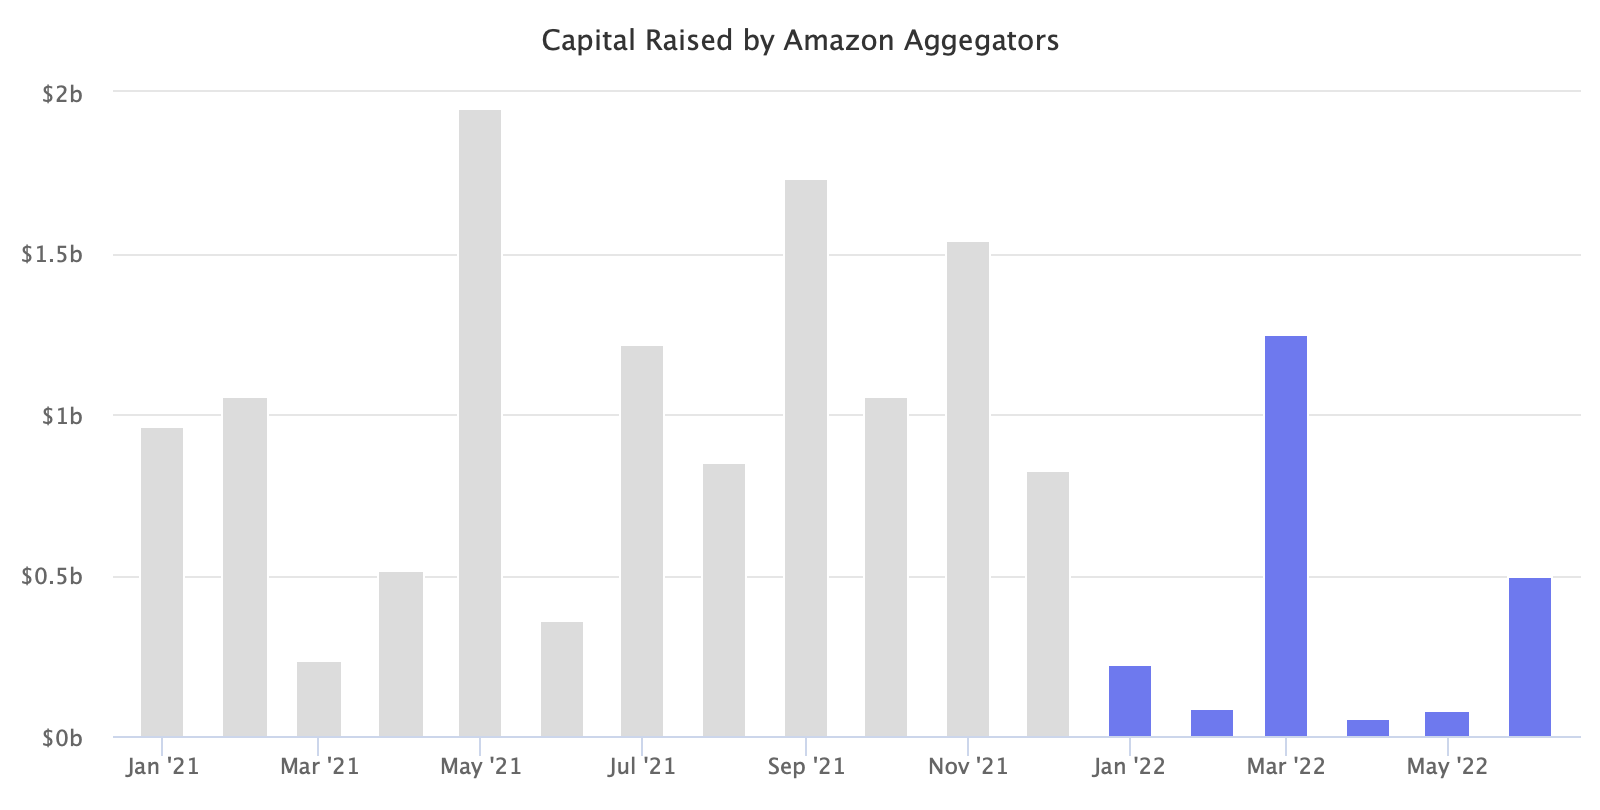 Capital raised by Amazon aggregators